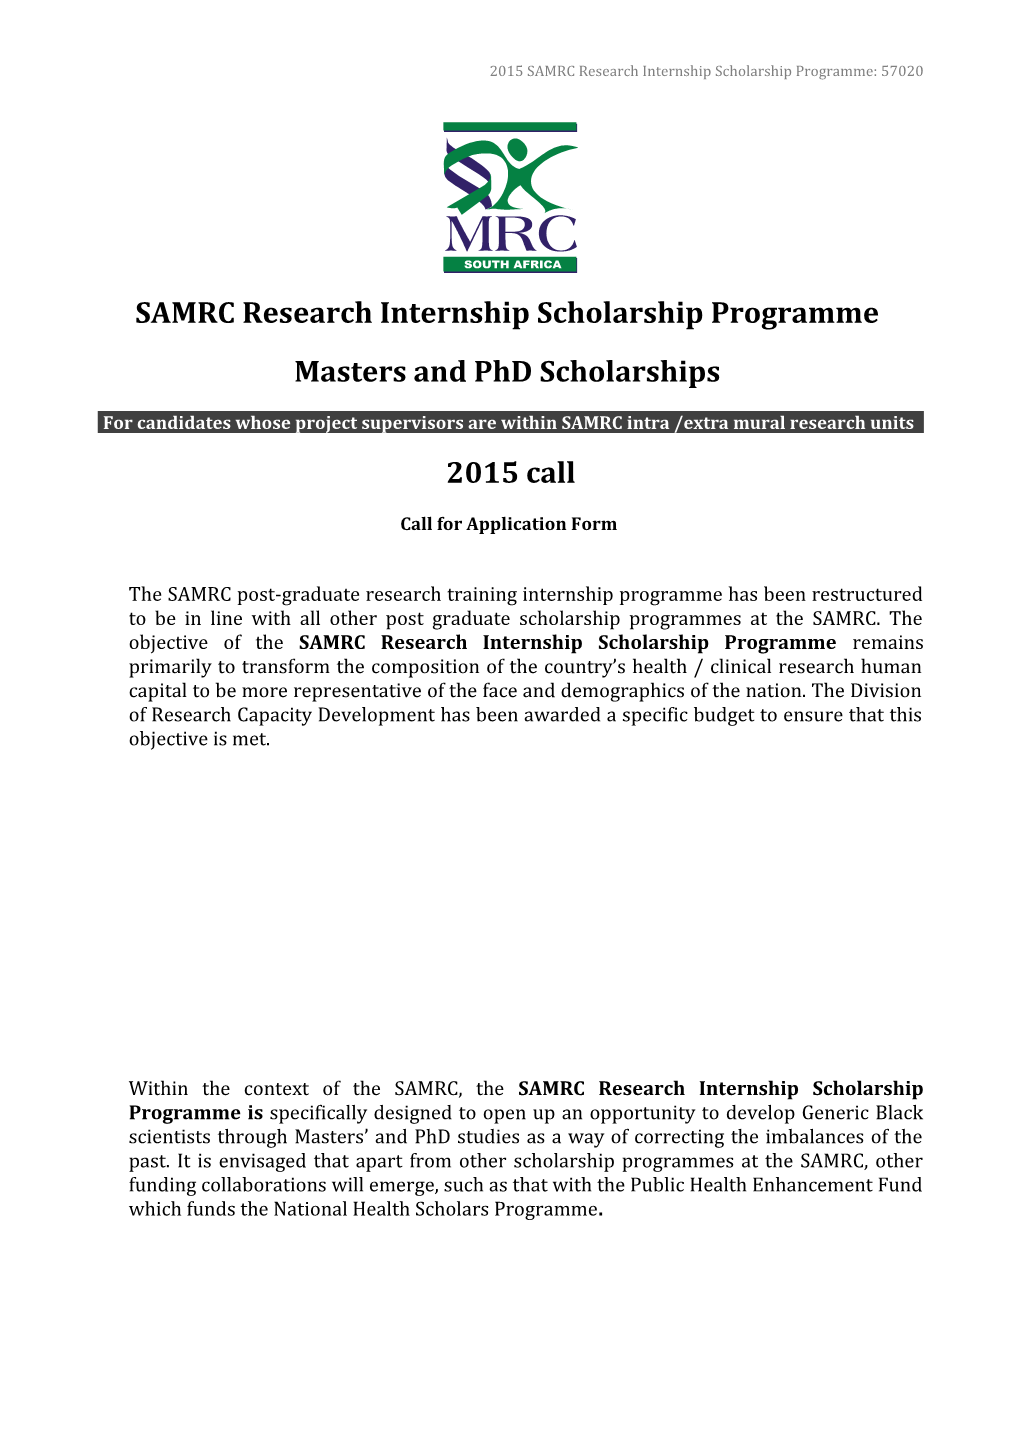 SAMRC Research Internship Scholarship Programme